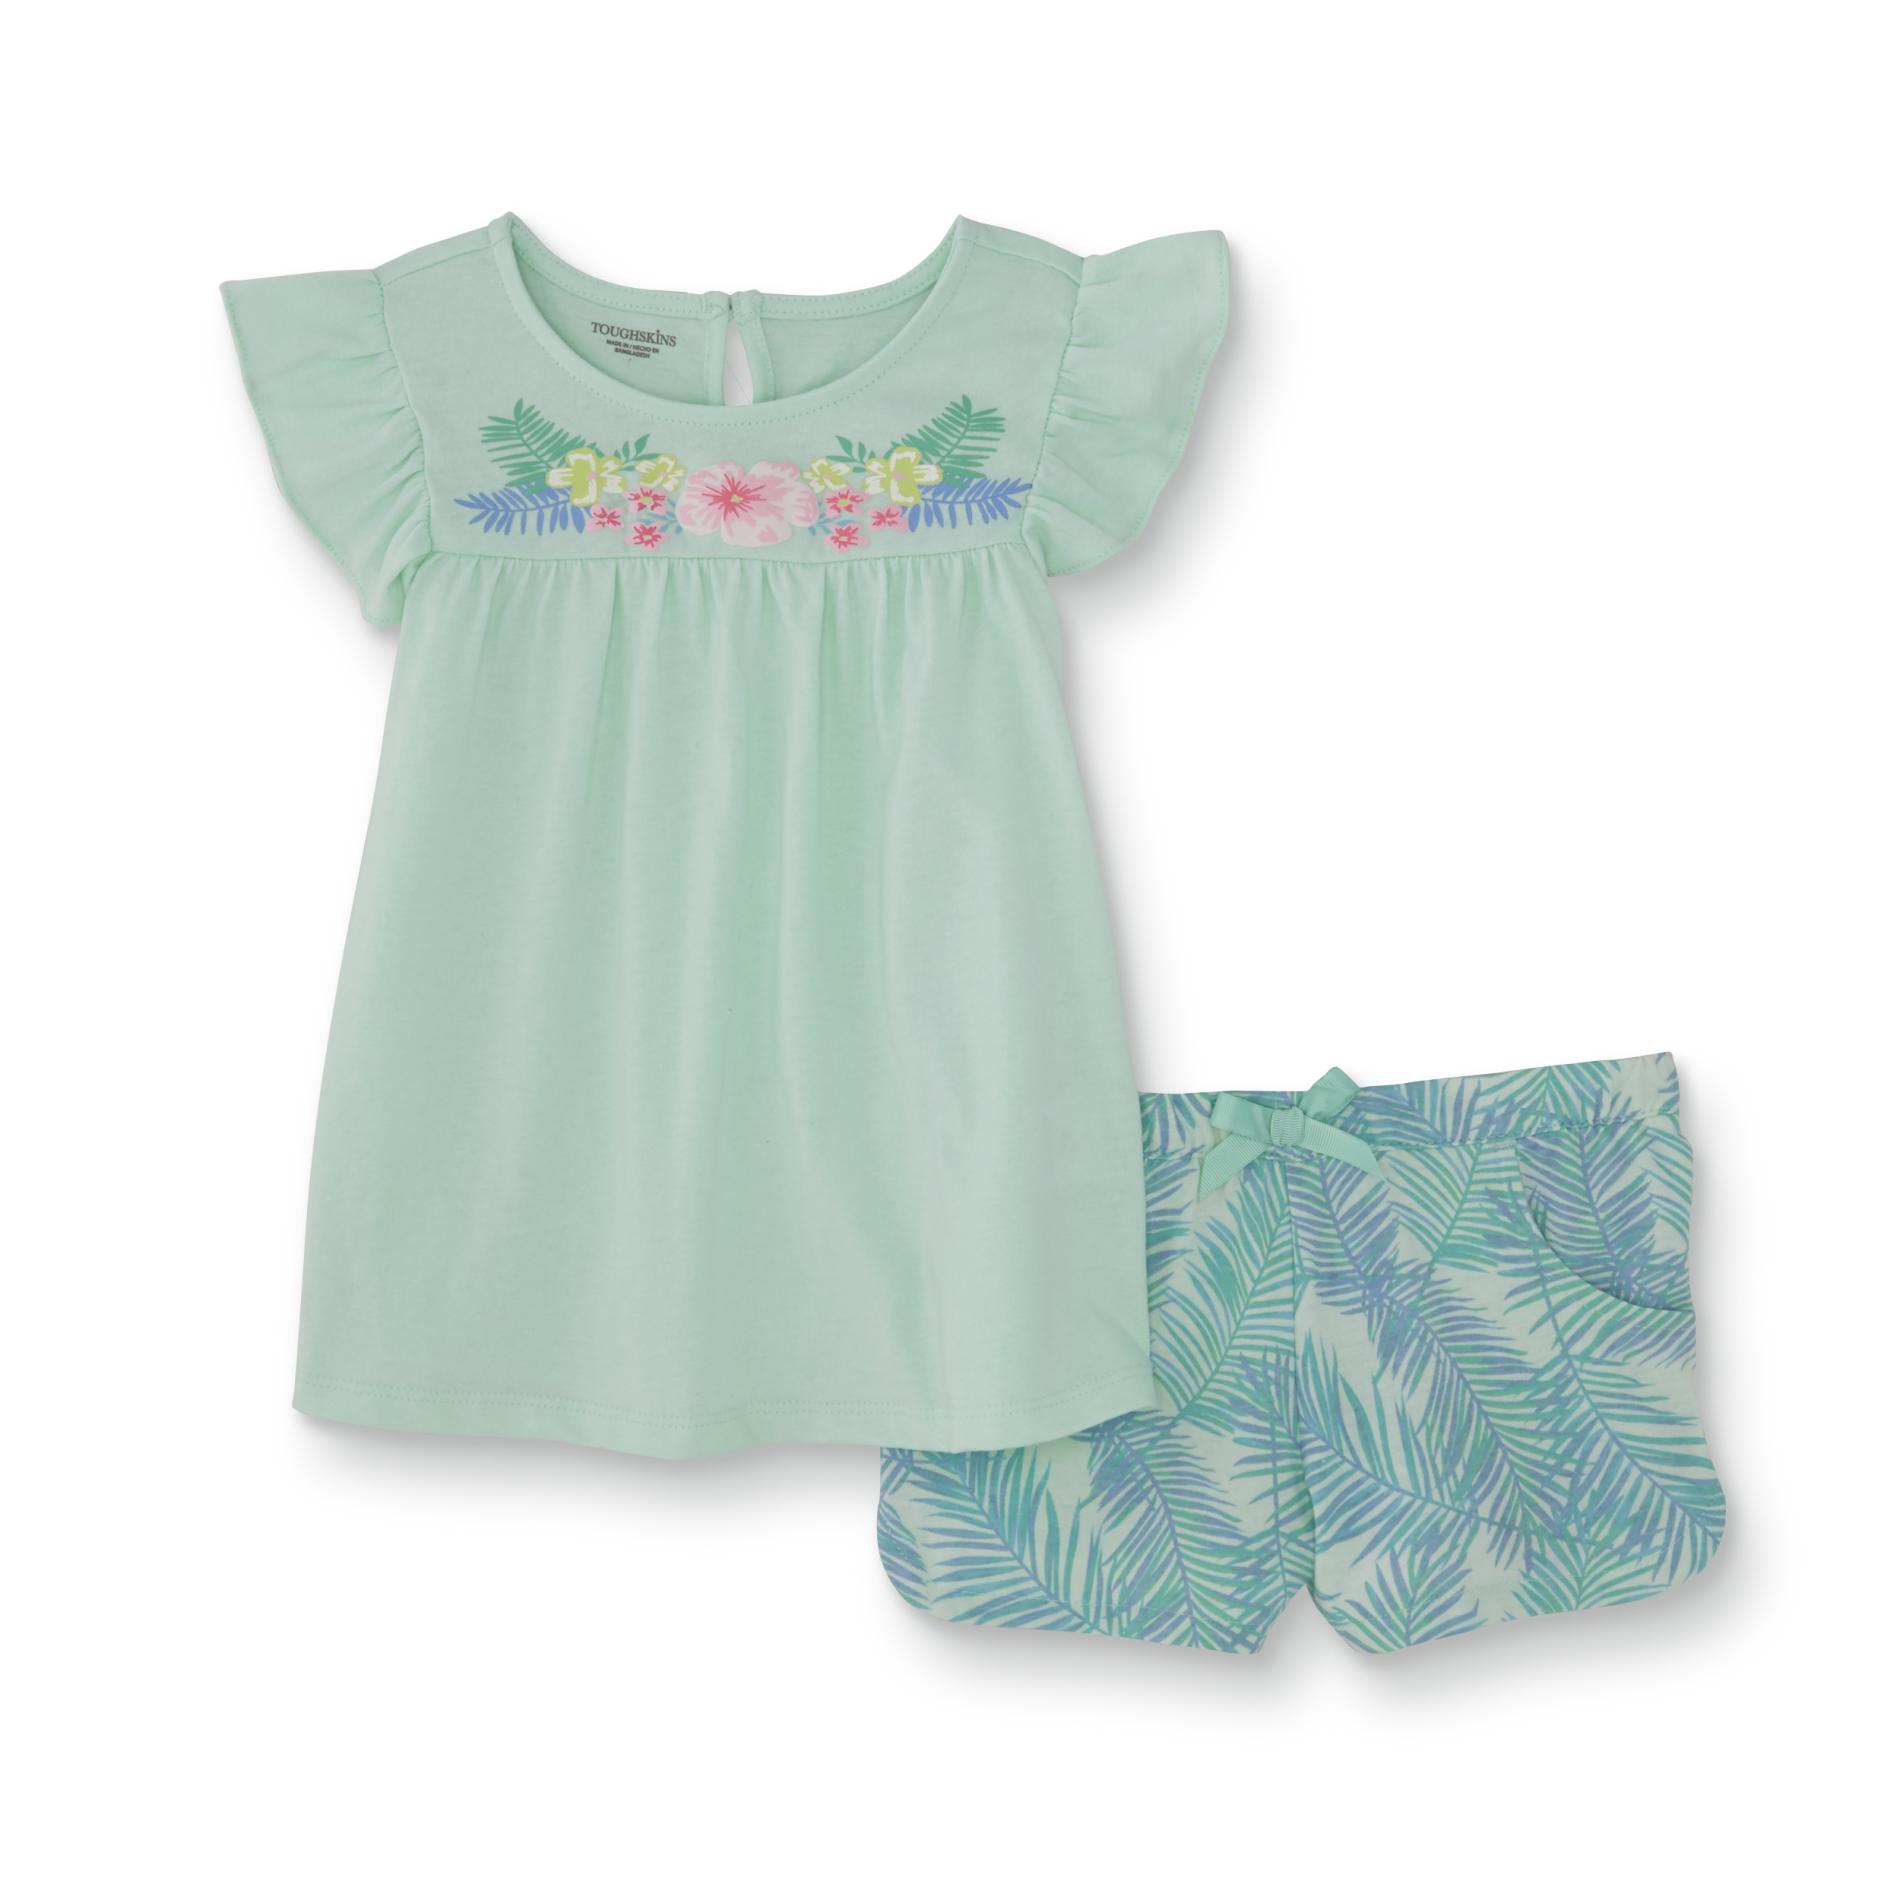 Toughskins Infant & Toddler Girls' Flutter T-Shirt & Shorts - Tropical Foliage